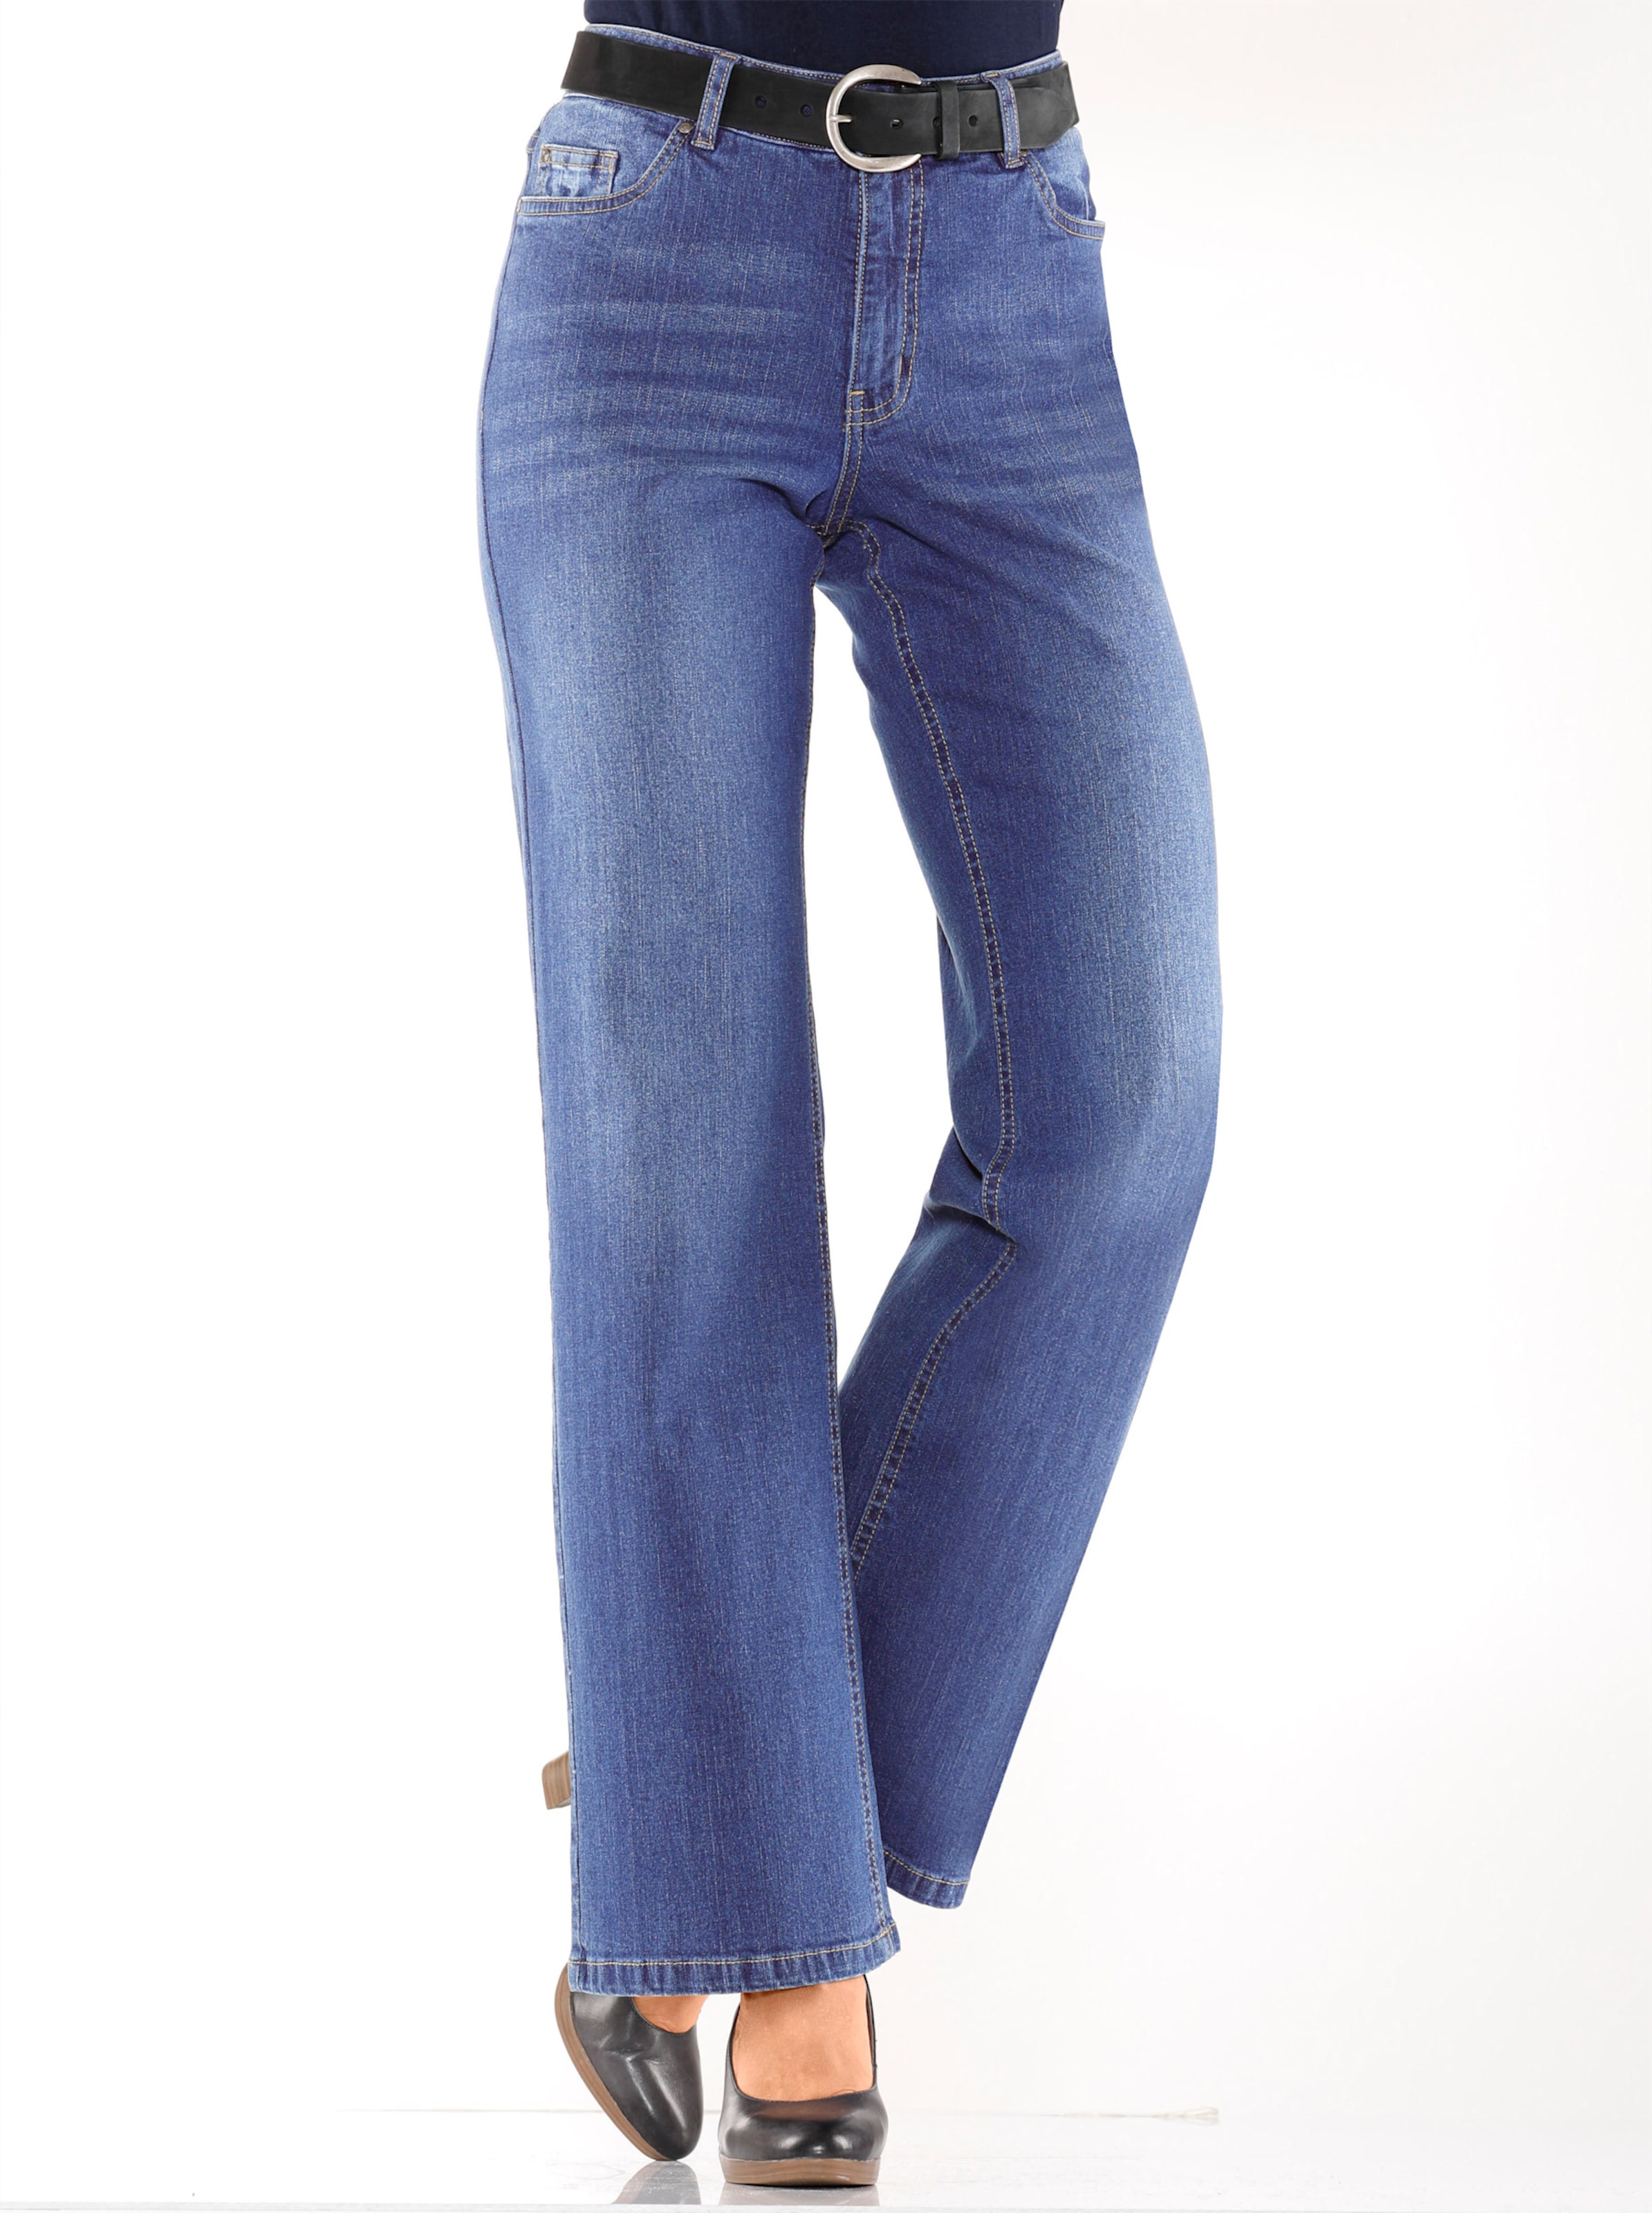 Witt Damen Jeans, blue-stone-washed